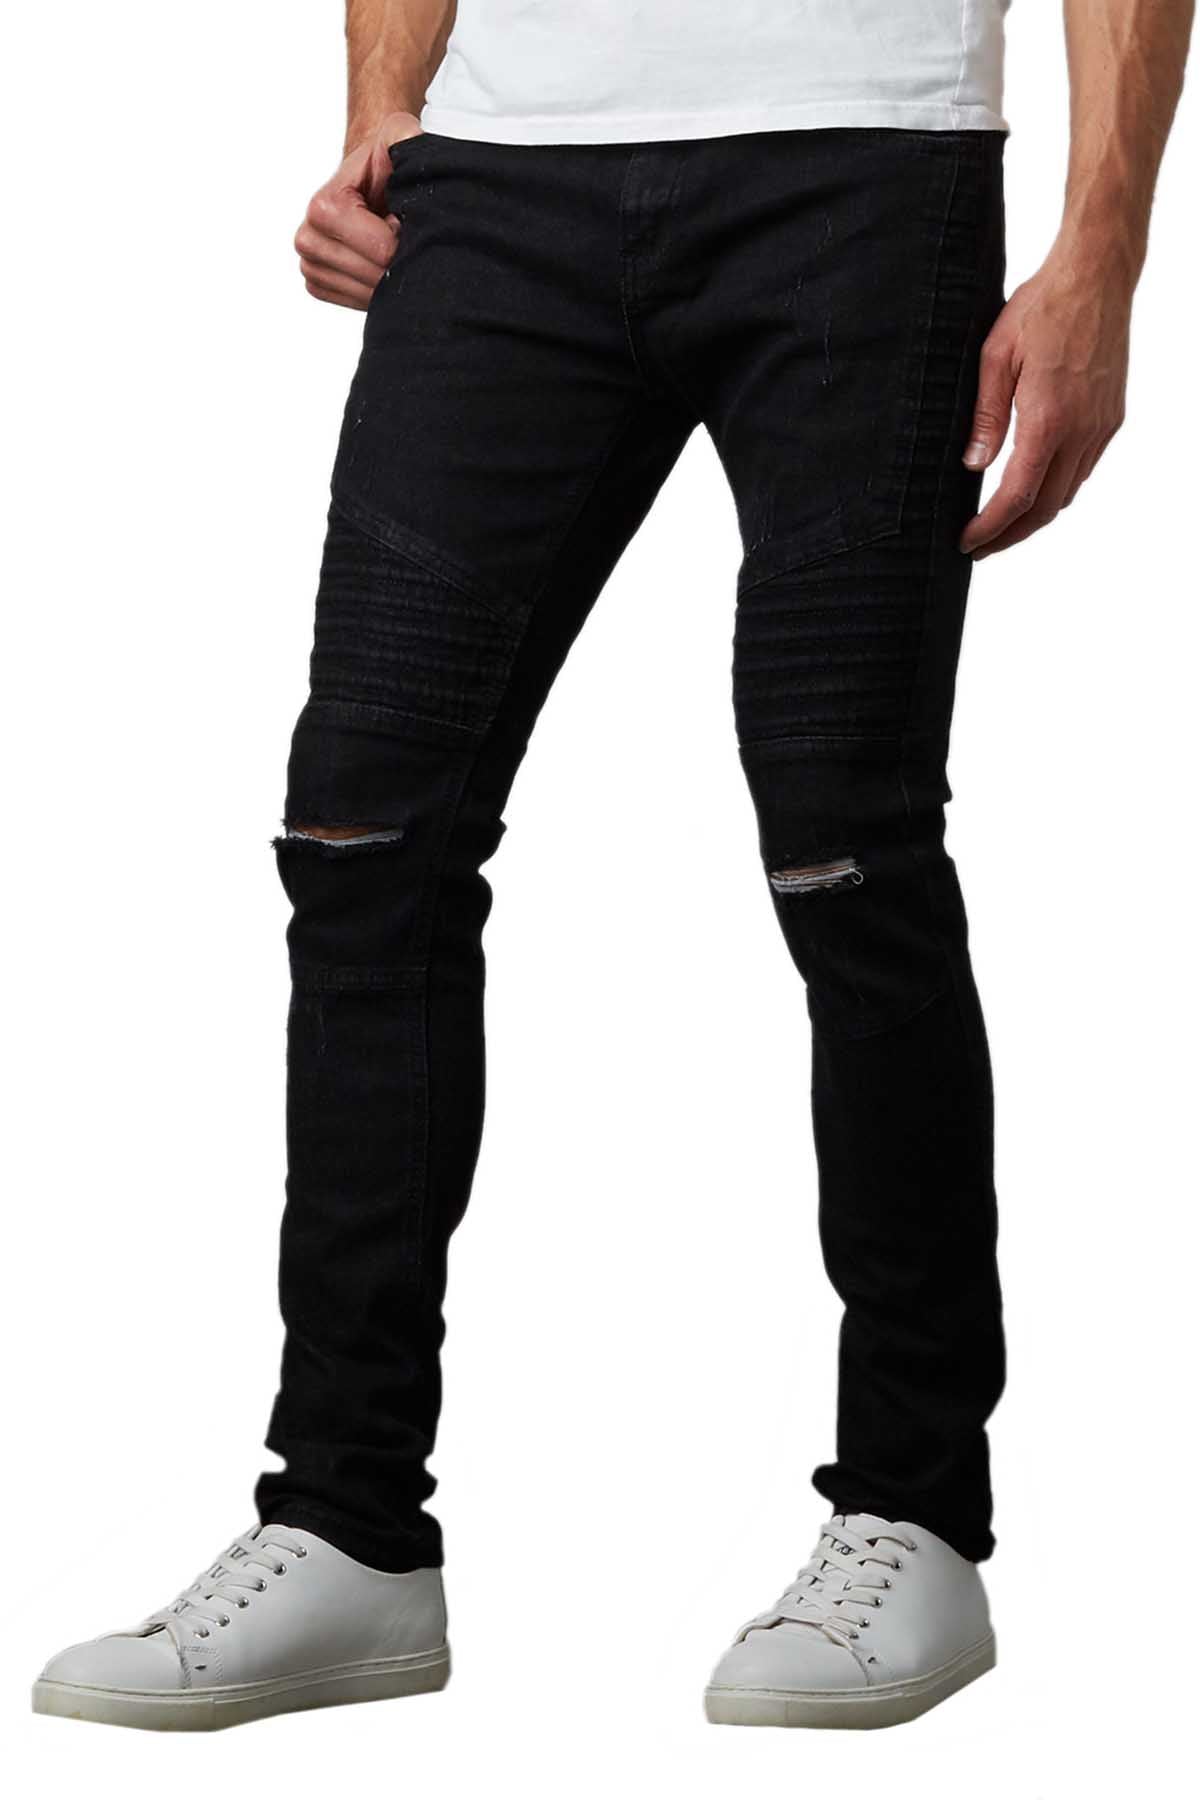 Tailored Recreation Premium Black Open Knee Tapered Denim Pant